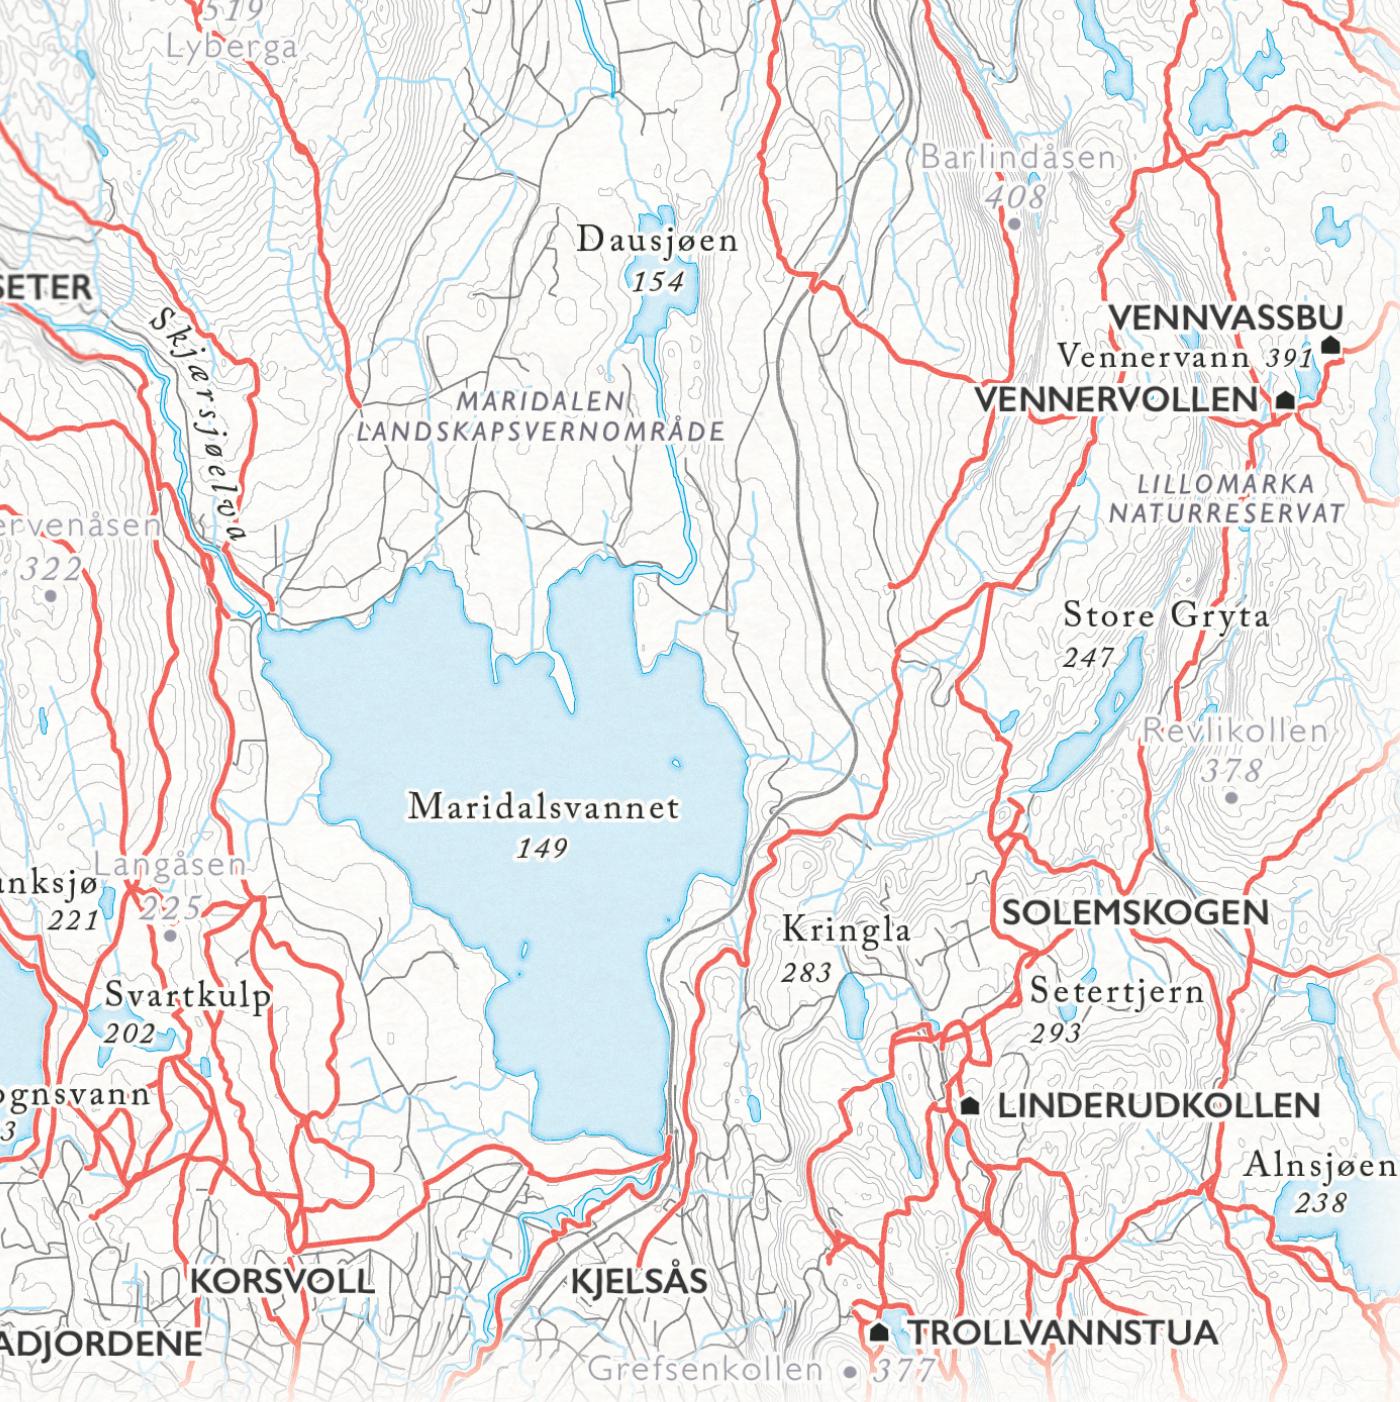 Turkart Oslo Nordmark-Posters, Prints, & Visual Artwork-Dapa Maps-Hyttefeber